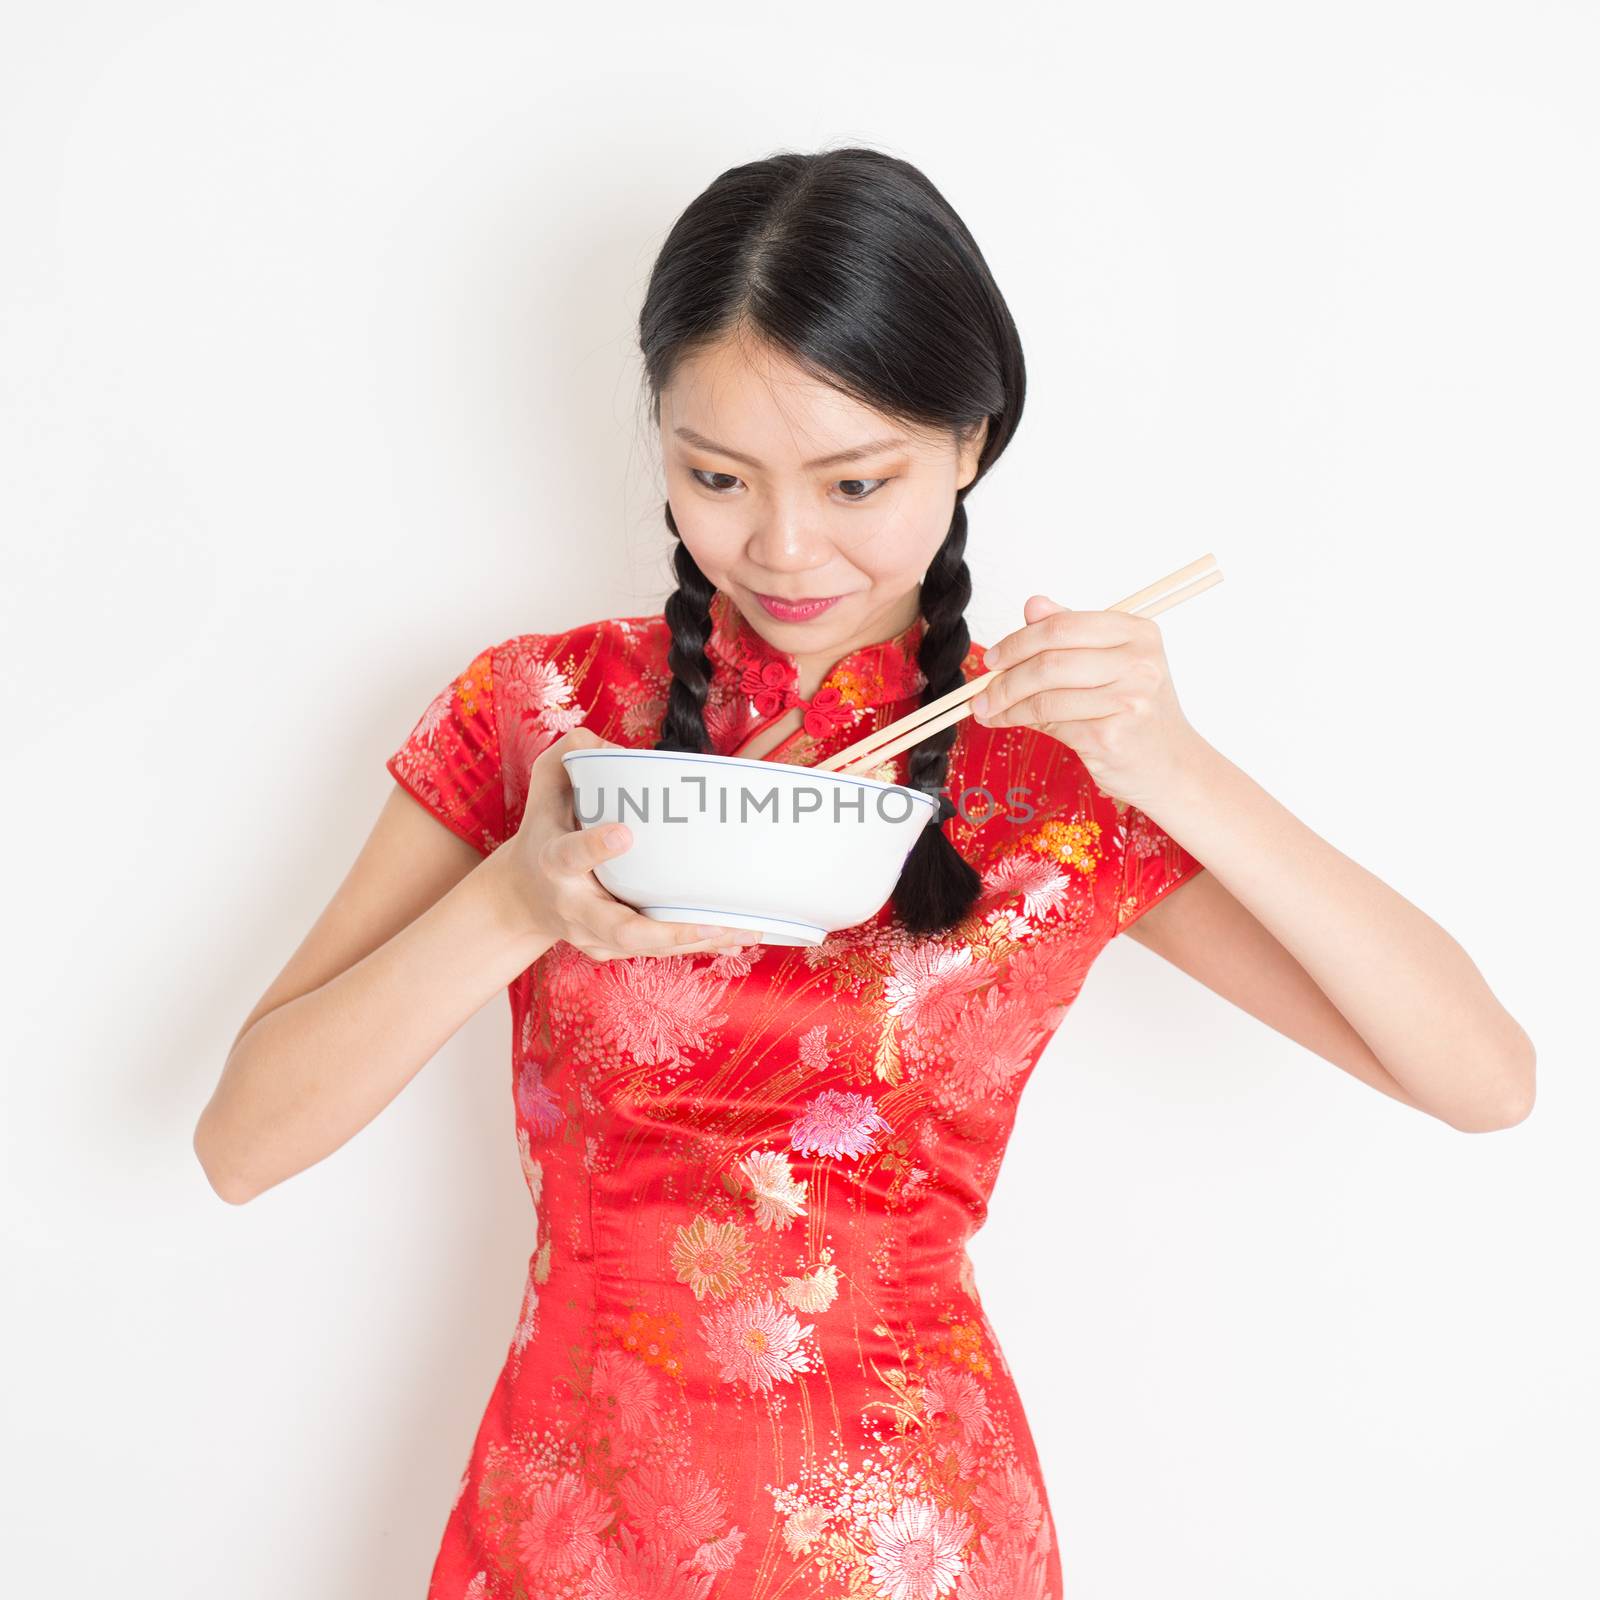 Oriental girl in red cheongsam eating with chopsticks by szefei